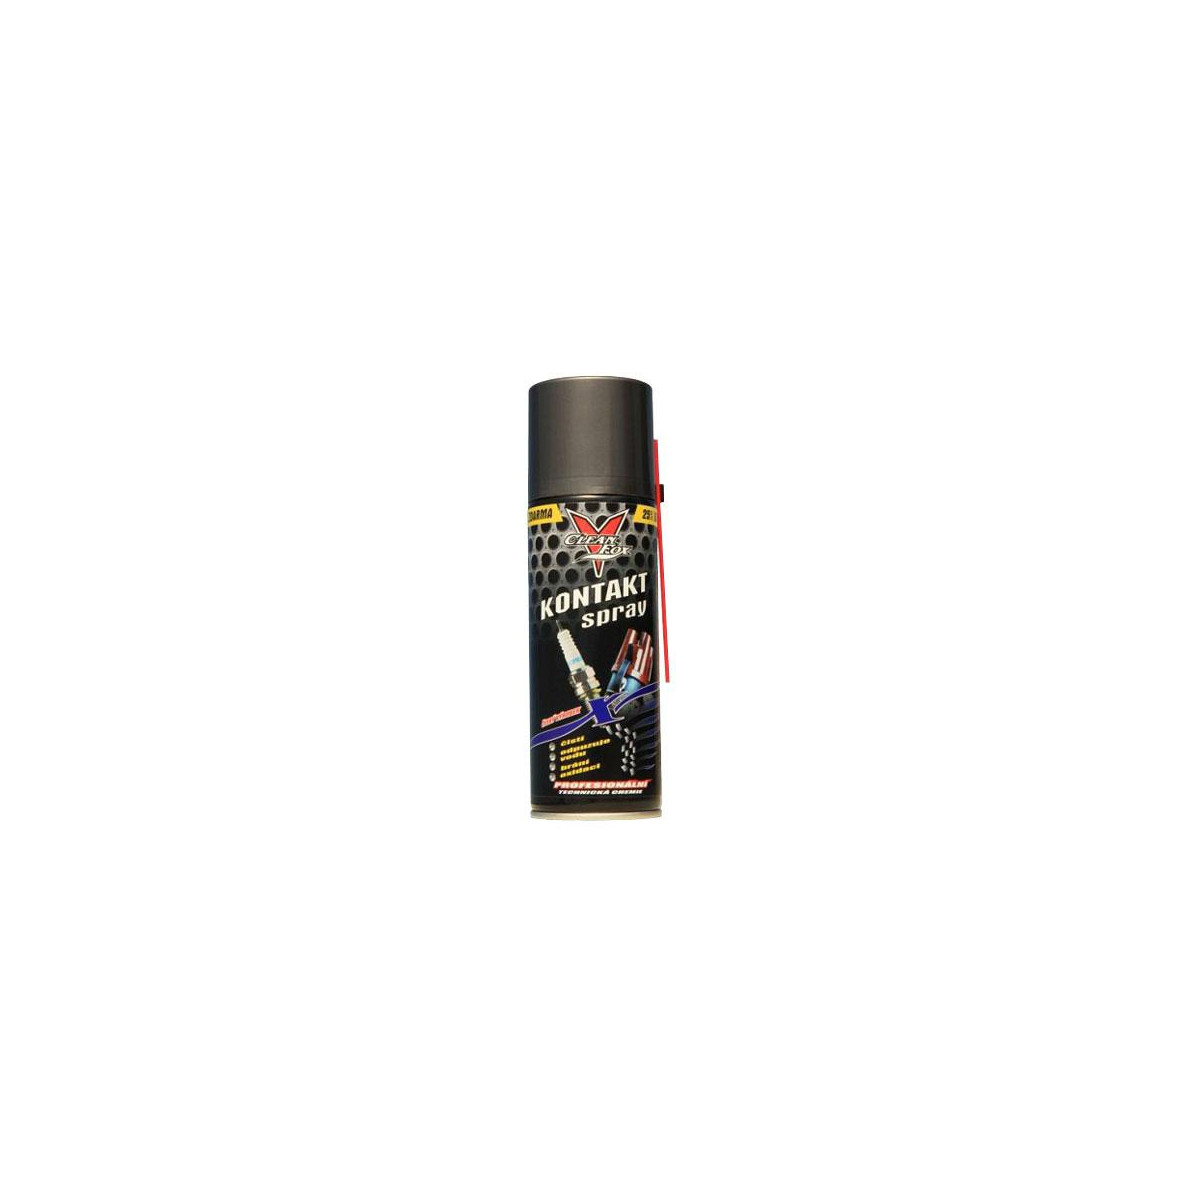 More about KONTAKT spray CLEANFOX 200ml